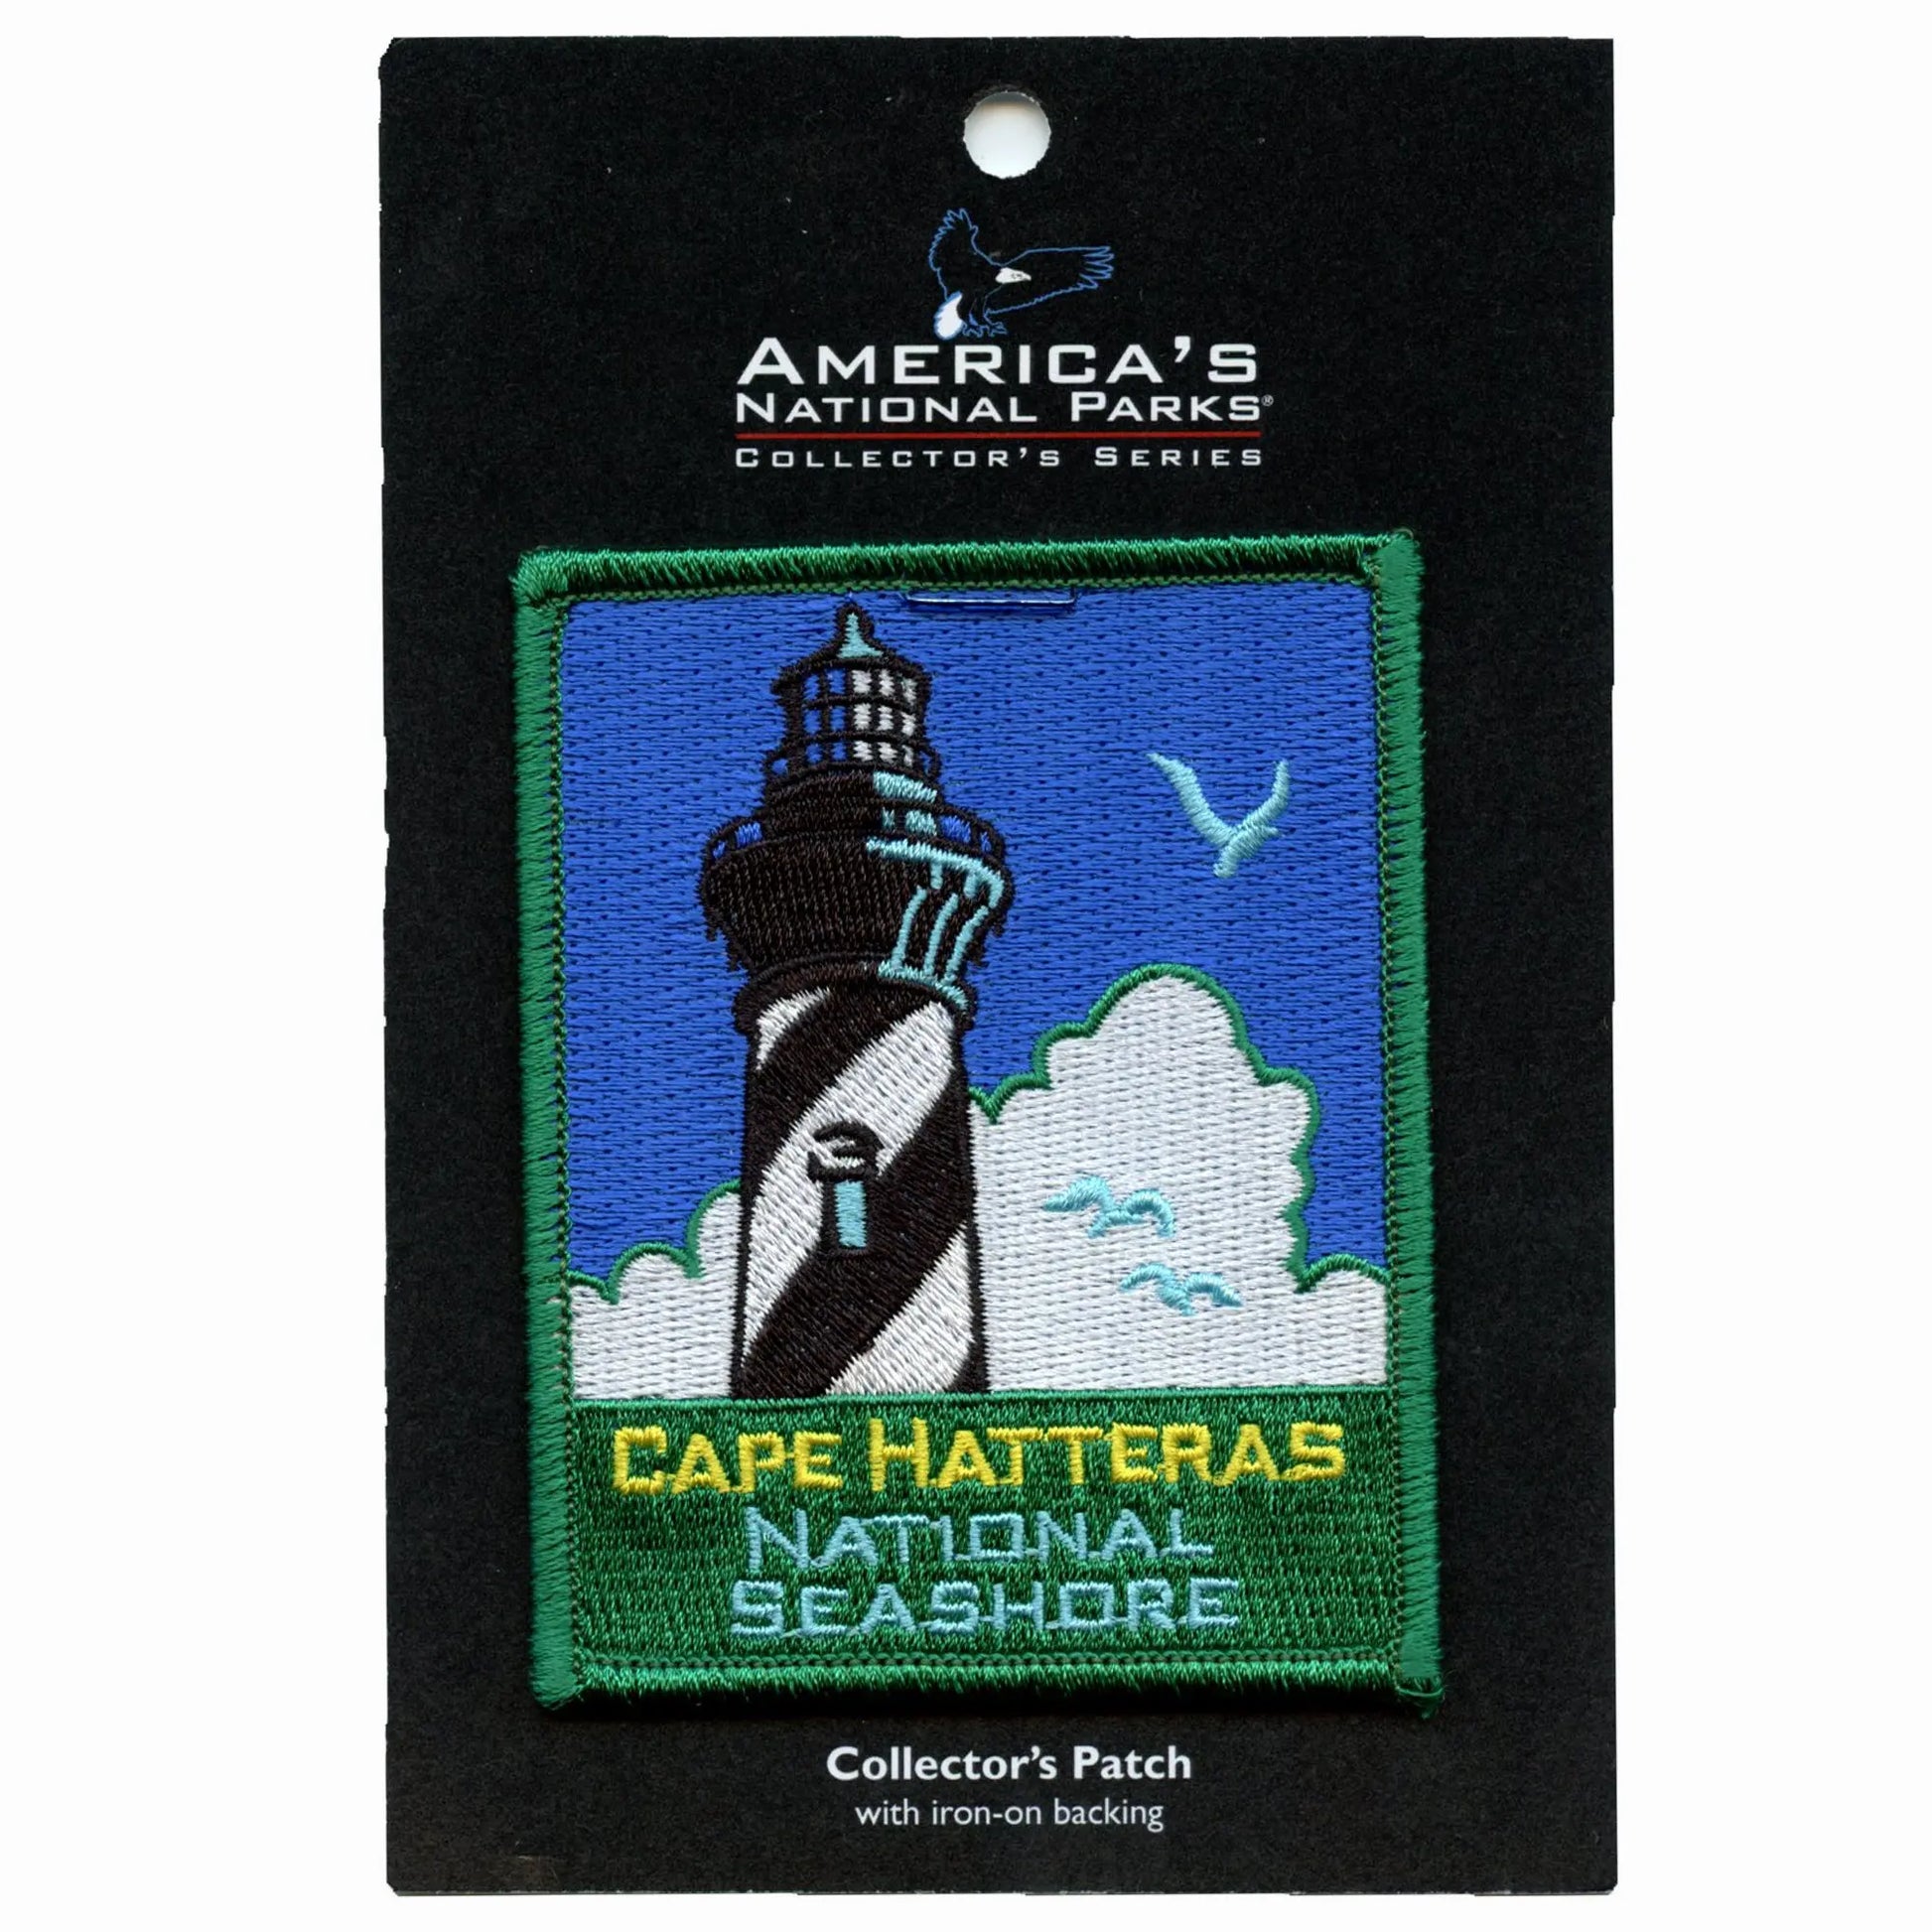 Cape Hatteras National Seashore Patch North Carolina Coastline Embroidered Iron On